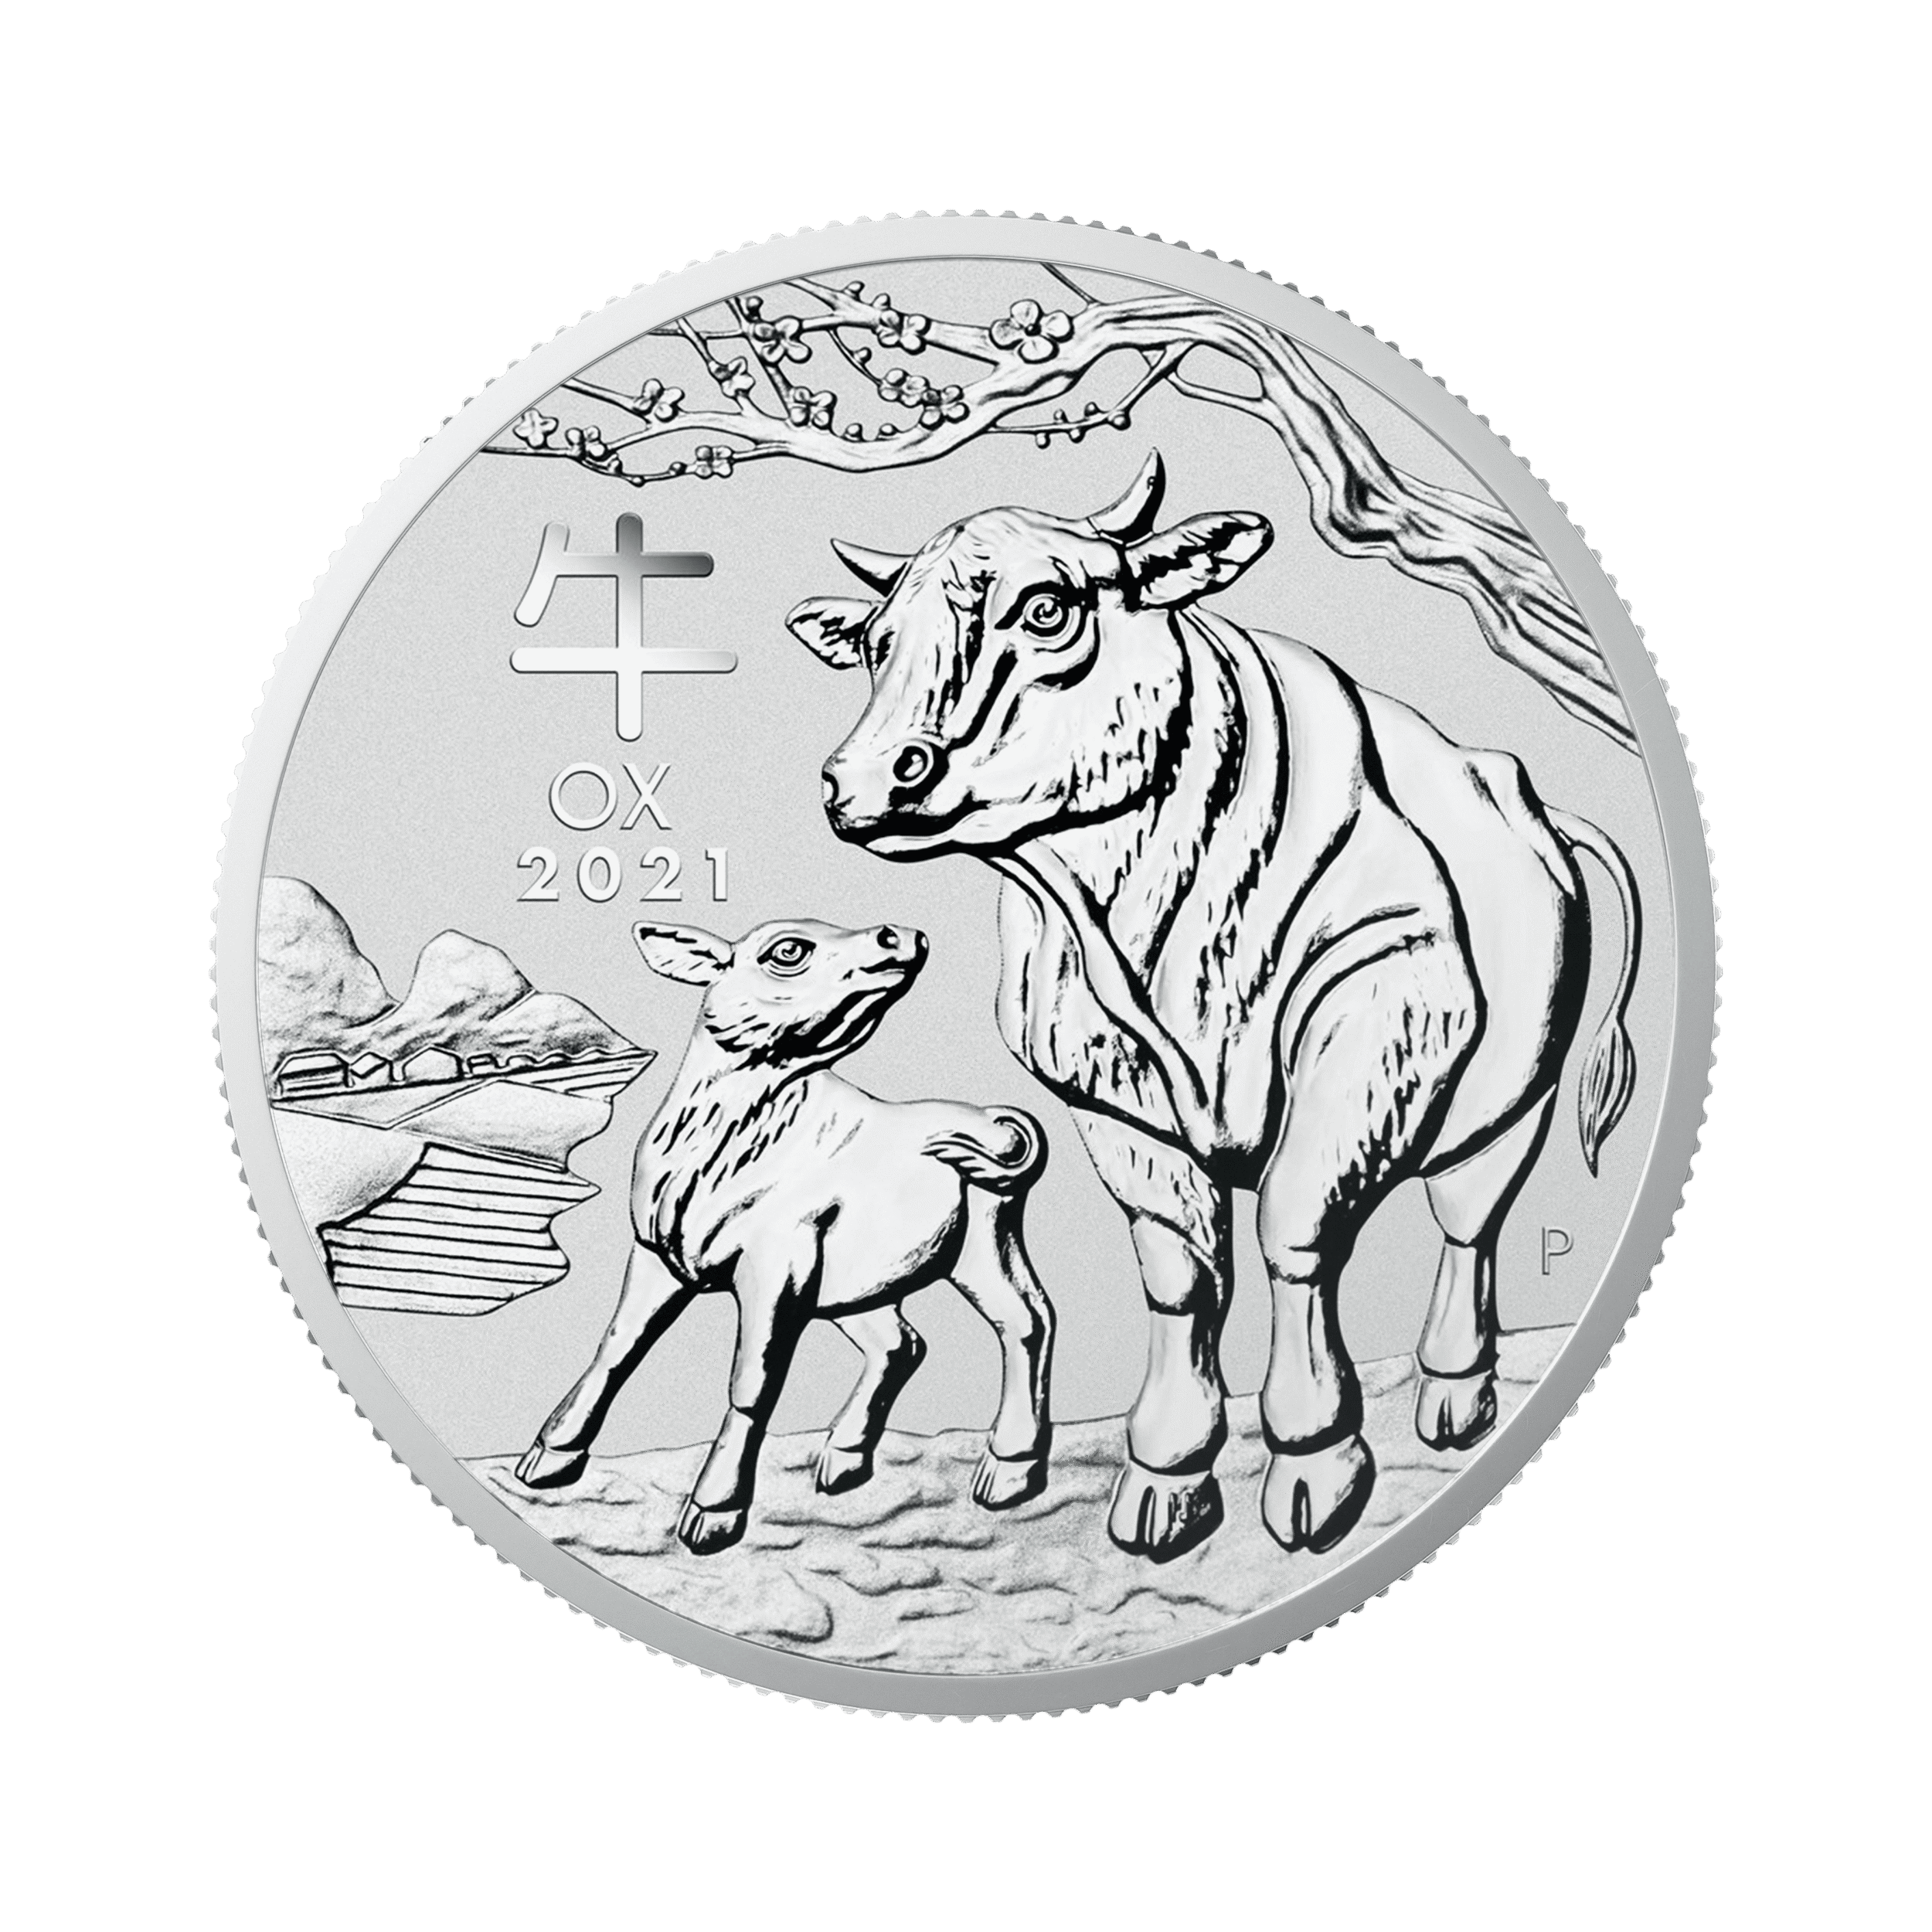 1 troy ounce zilveren munt Lunar 2021 voorkant